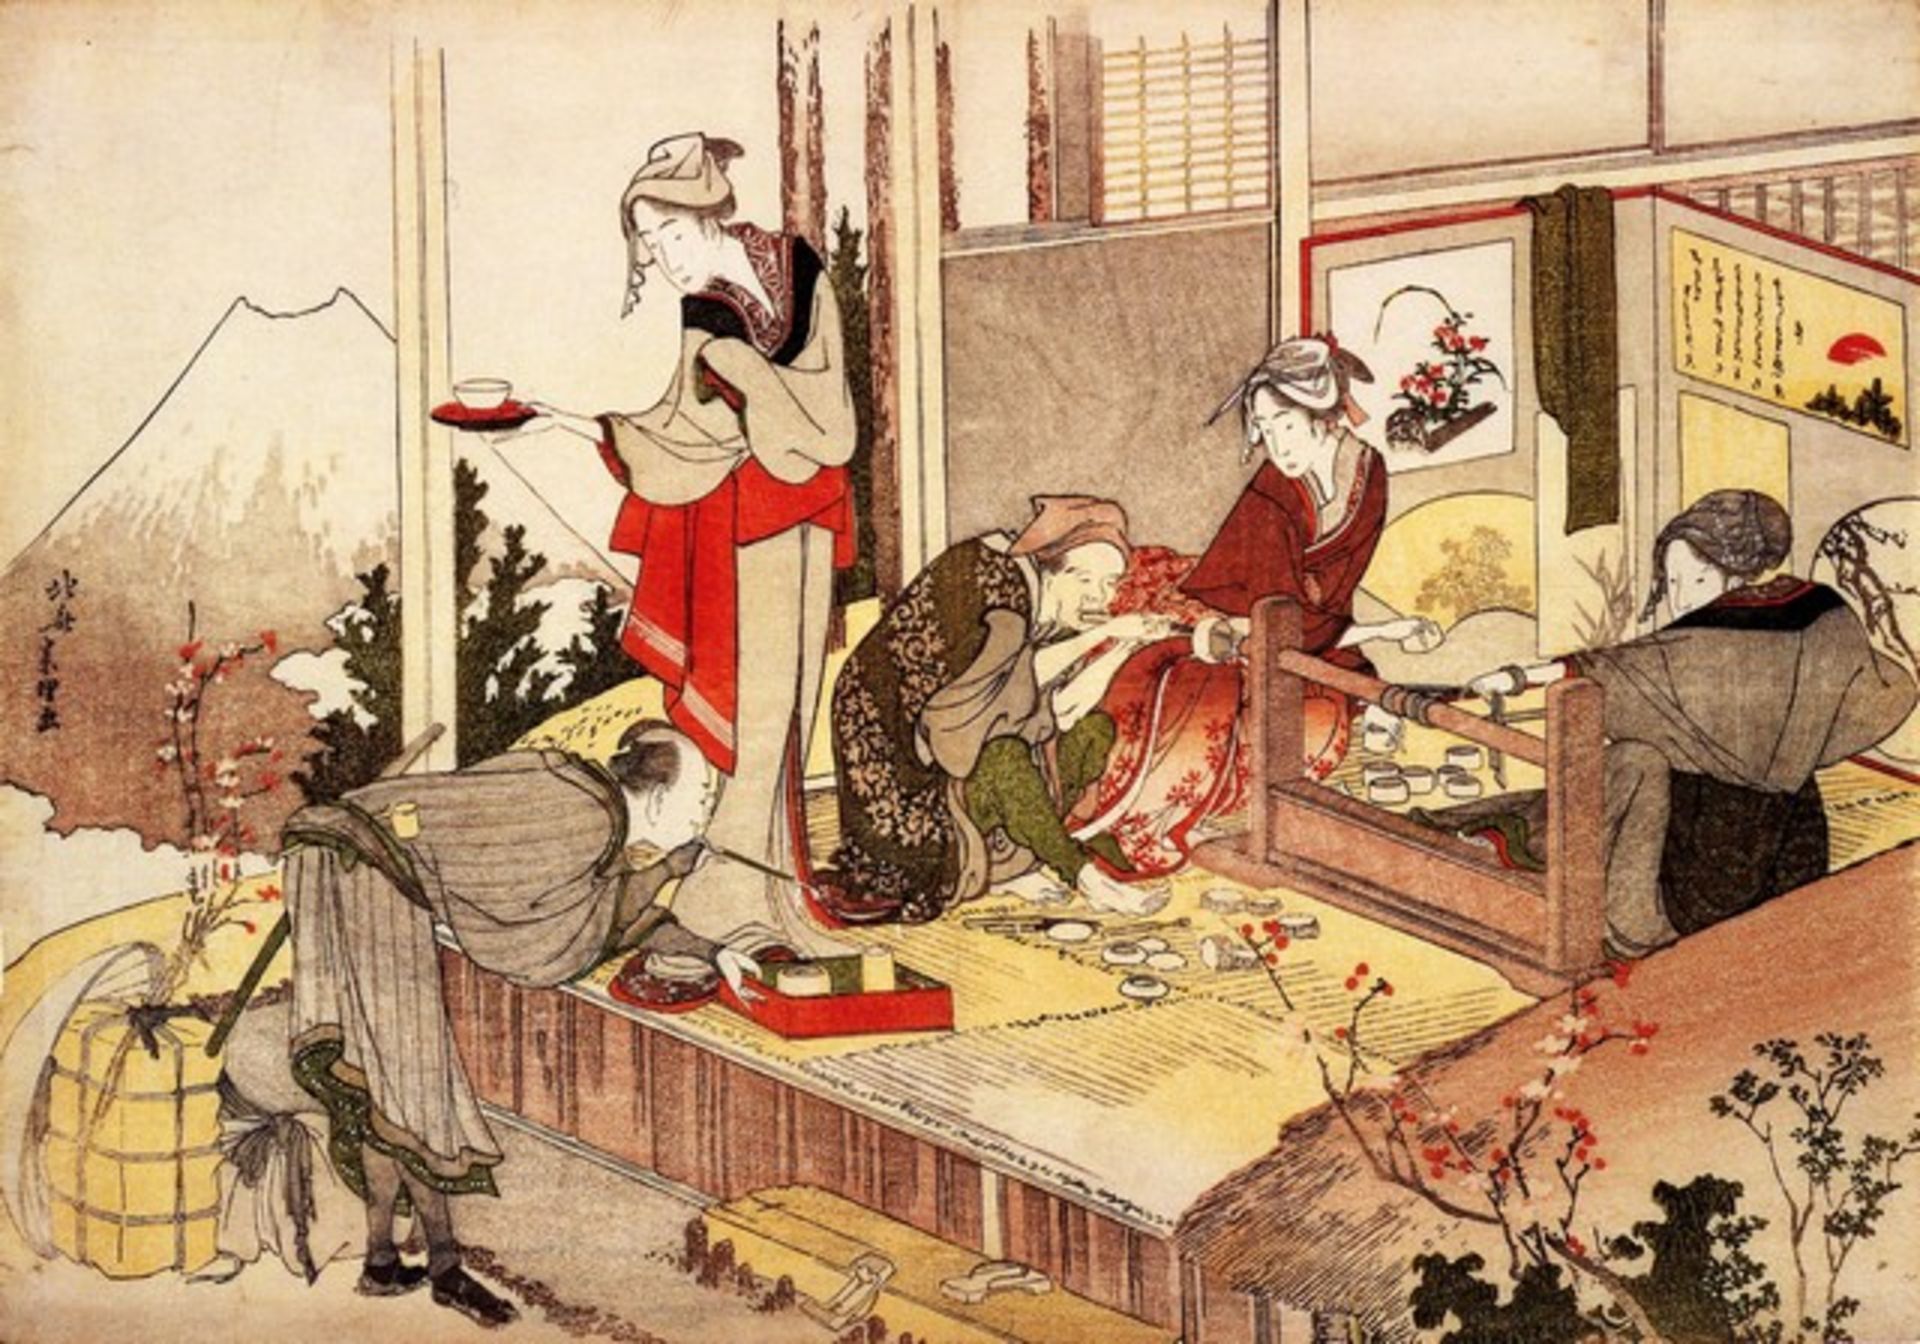 Hokusai - The Studio of Netsuke